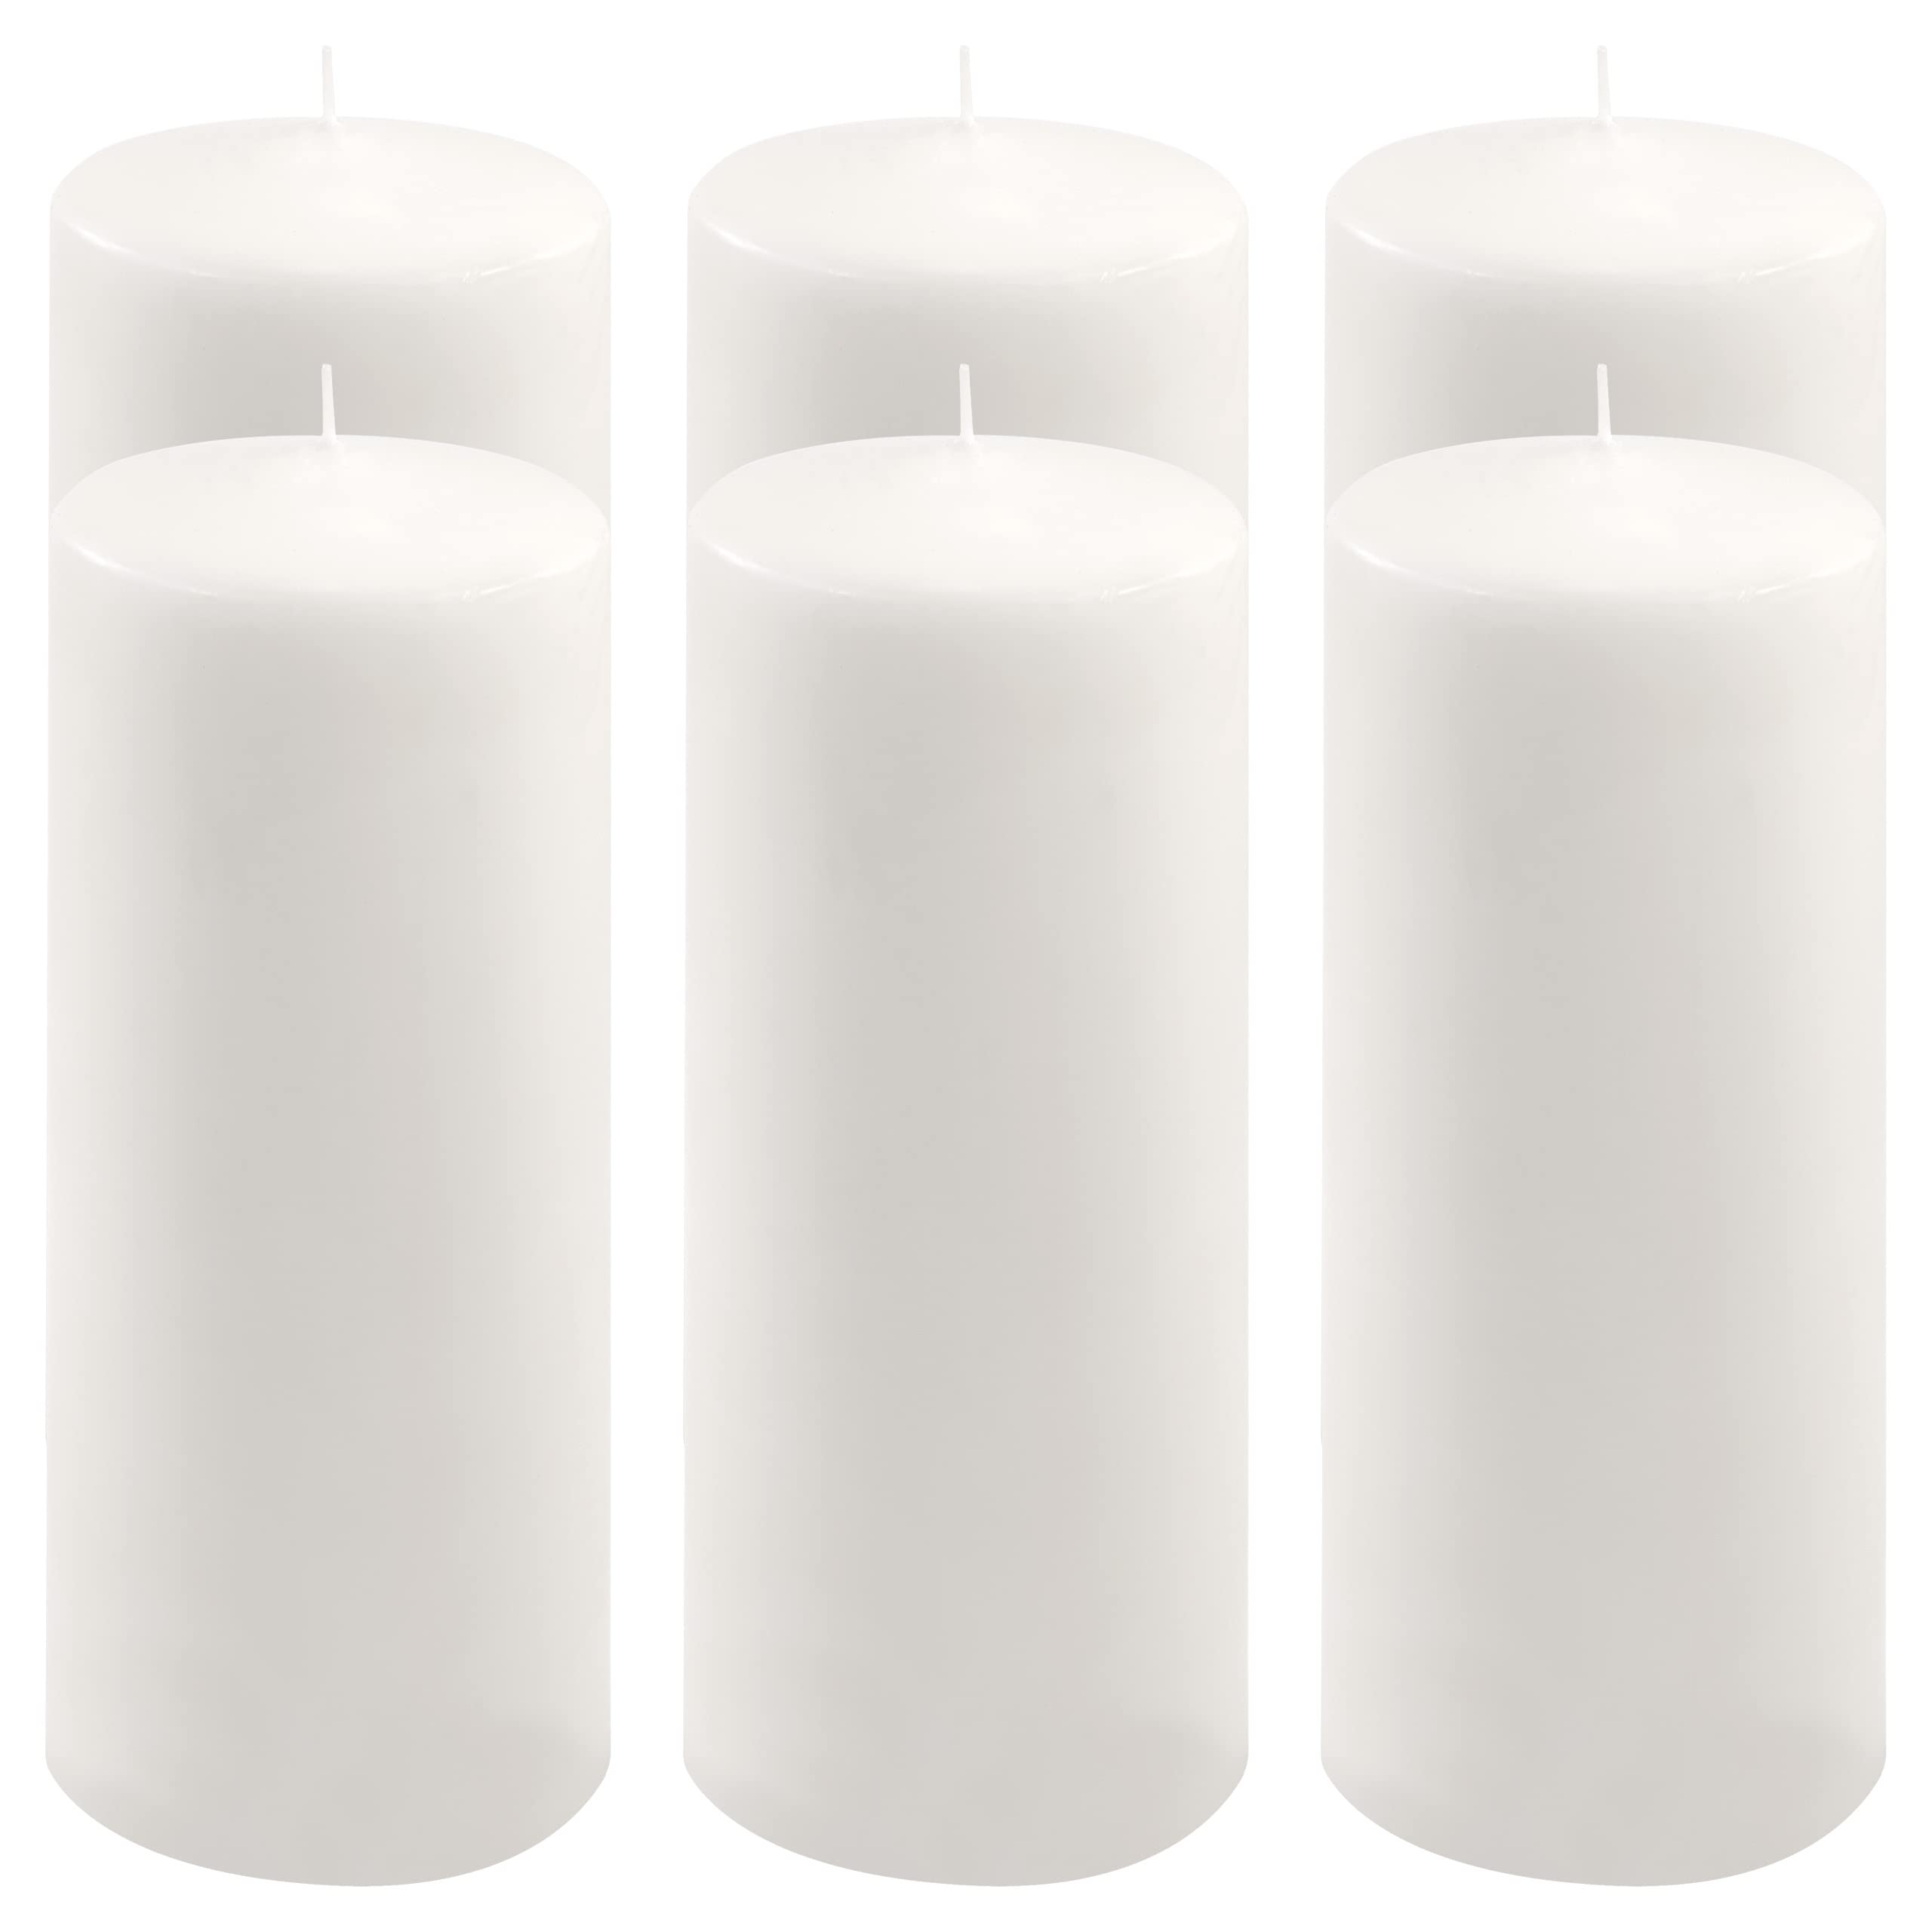 Stumpenkerze weiß Höhe 25 cm Ø 10 cm lange Brenndauer Rund-Kerze Säulenkerzen Kerzen-Deko Tafelkerzen Weihnachts-Kerzen Hochzeit Xmas (6)